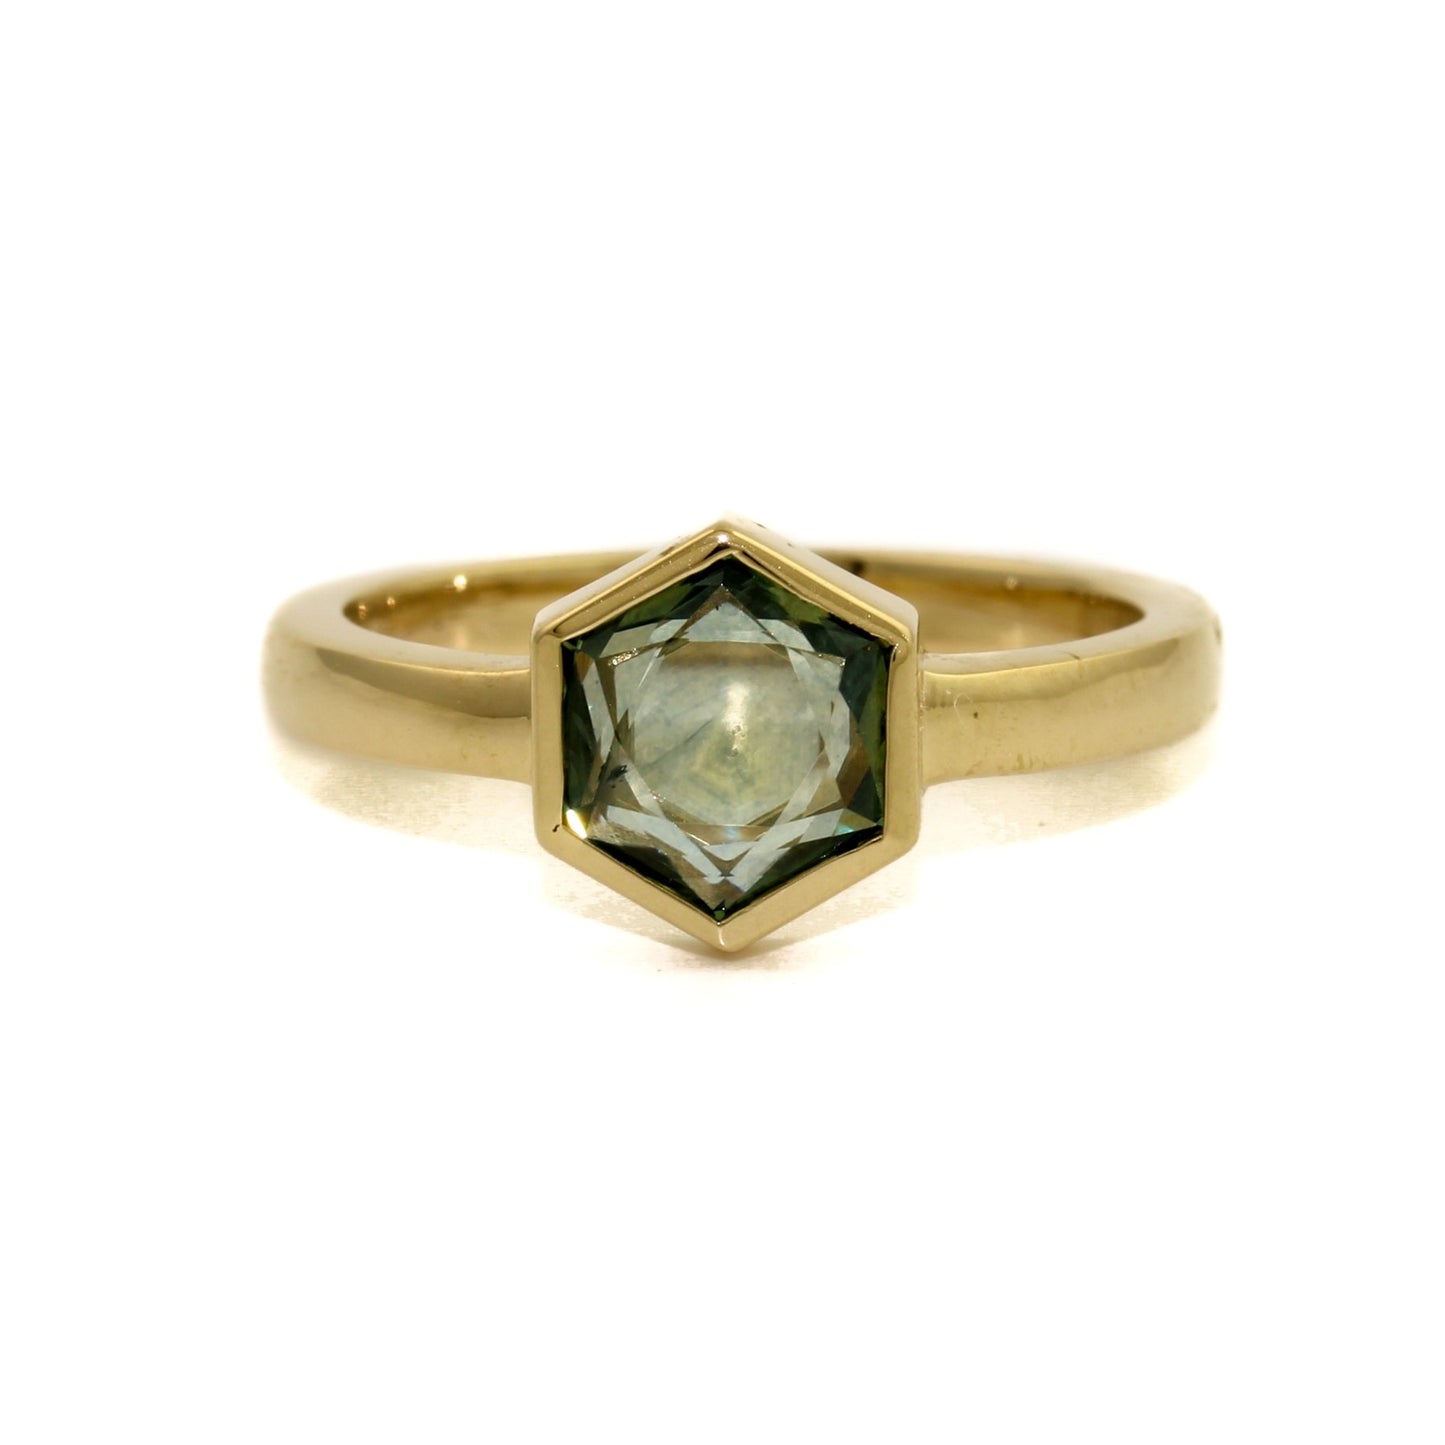 Northern Lights Sapphire Ring - Kingdom Jewelry